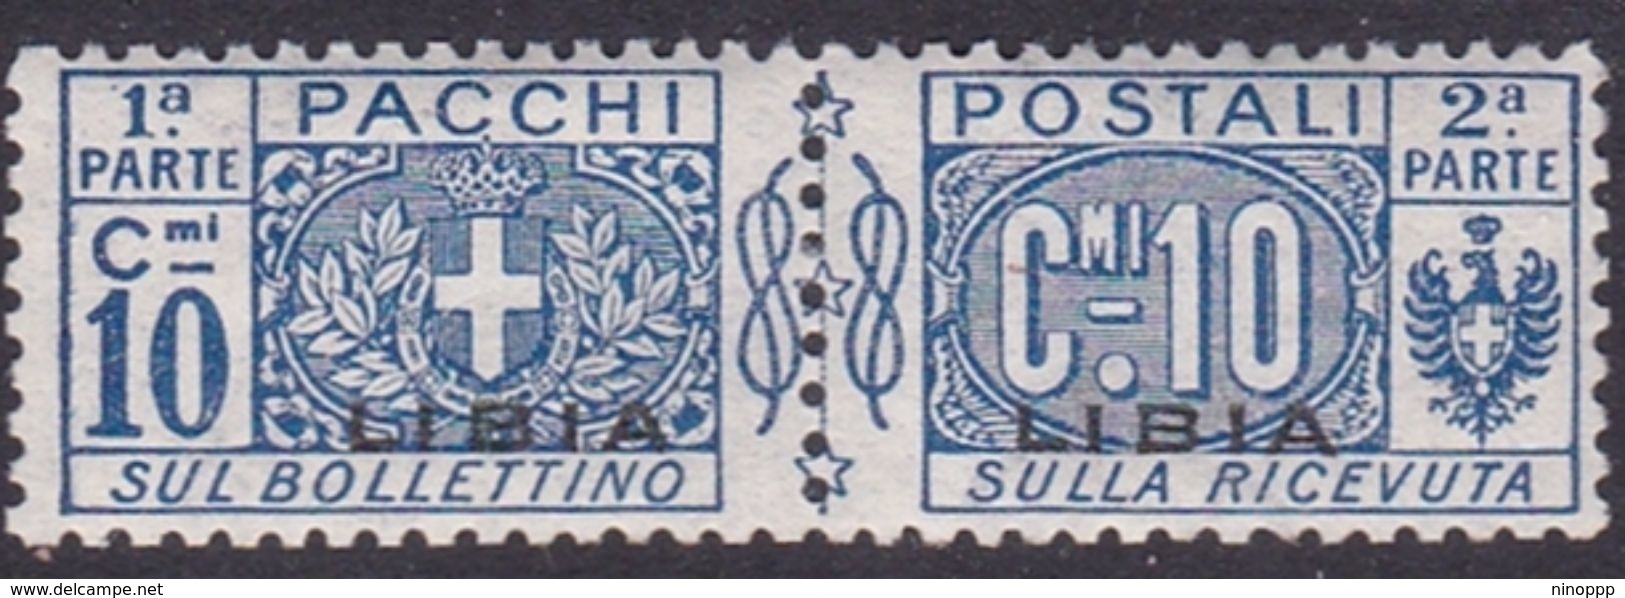 Italy-Colonies And Territories-Libya PP 2 1915-24 Parcel Post,10c Blue,mint Hinged - Libya